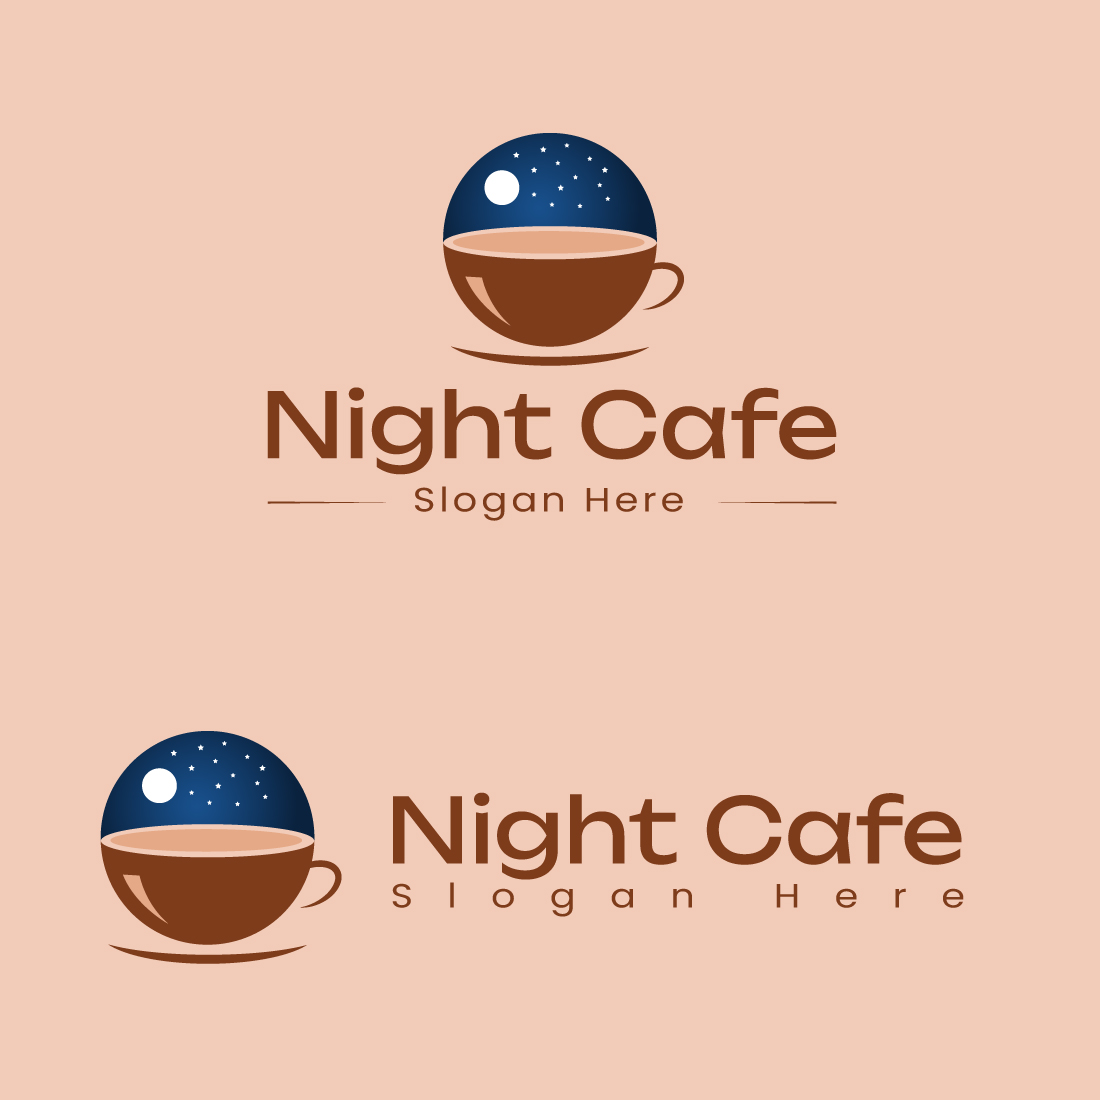 Coffe Night Cafe Logo Design Template cover image.